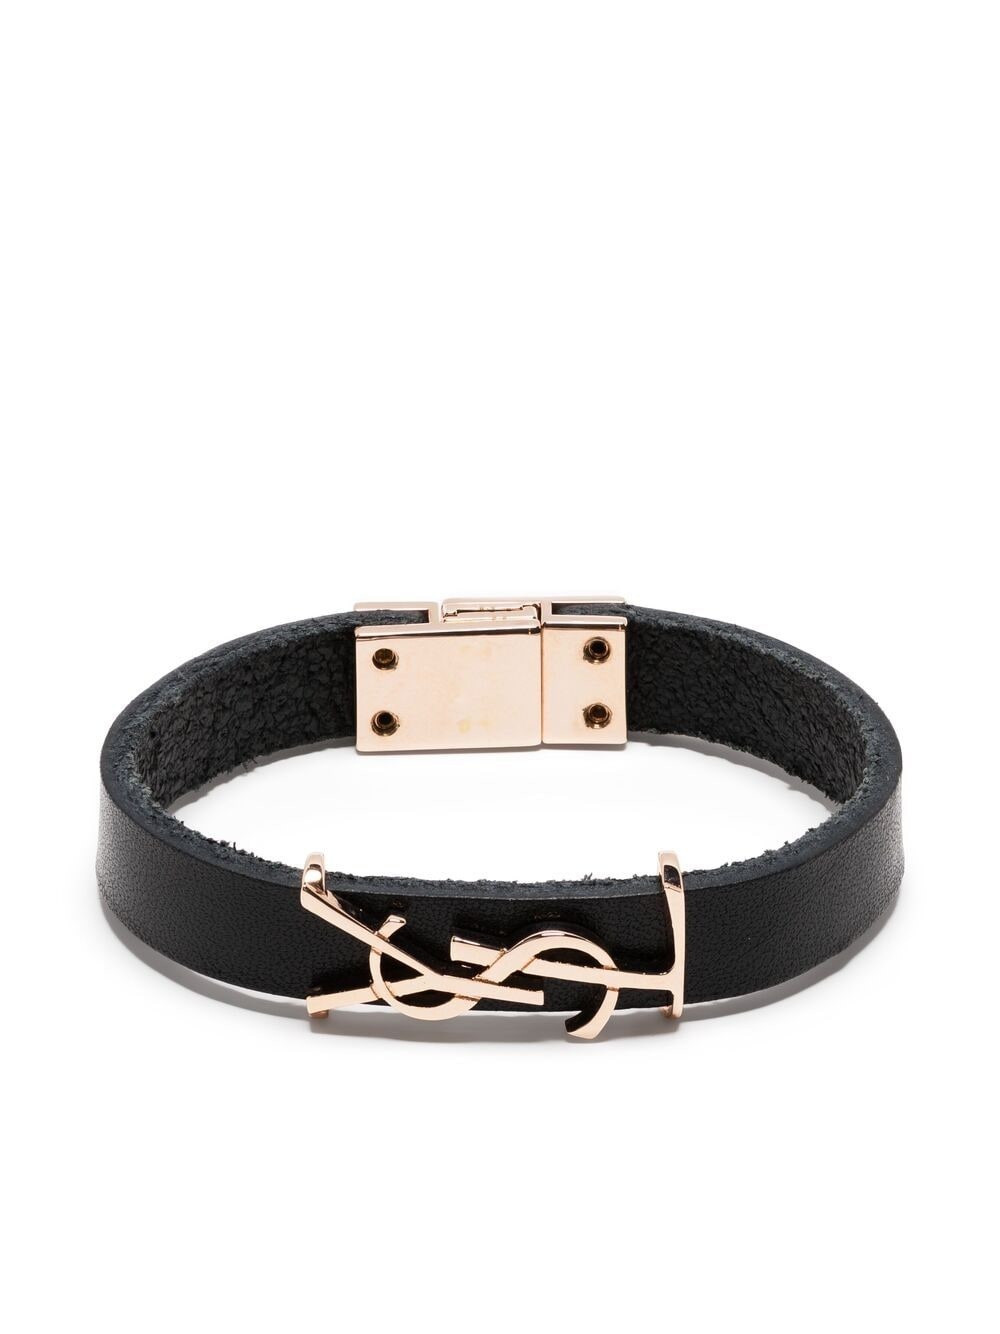 YSL logo leather bracelet - 1